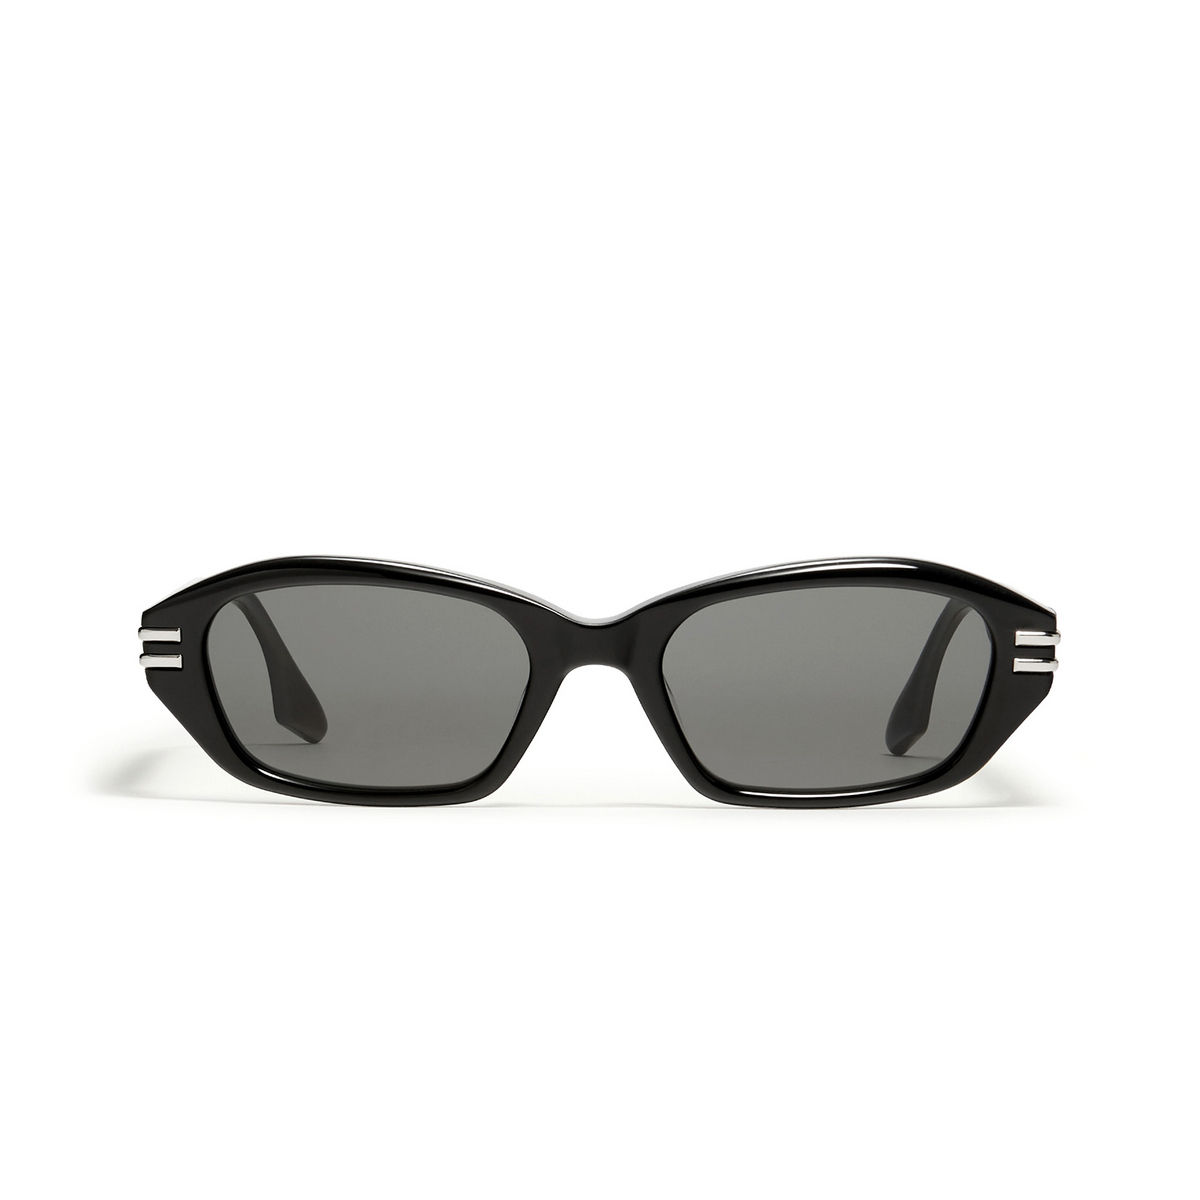 Gentle Monster® Irregular Sunglasses: Deck color Black 01 - front view.